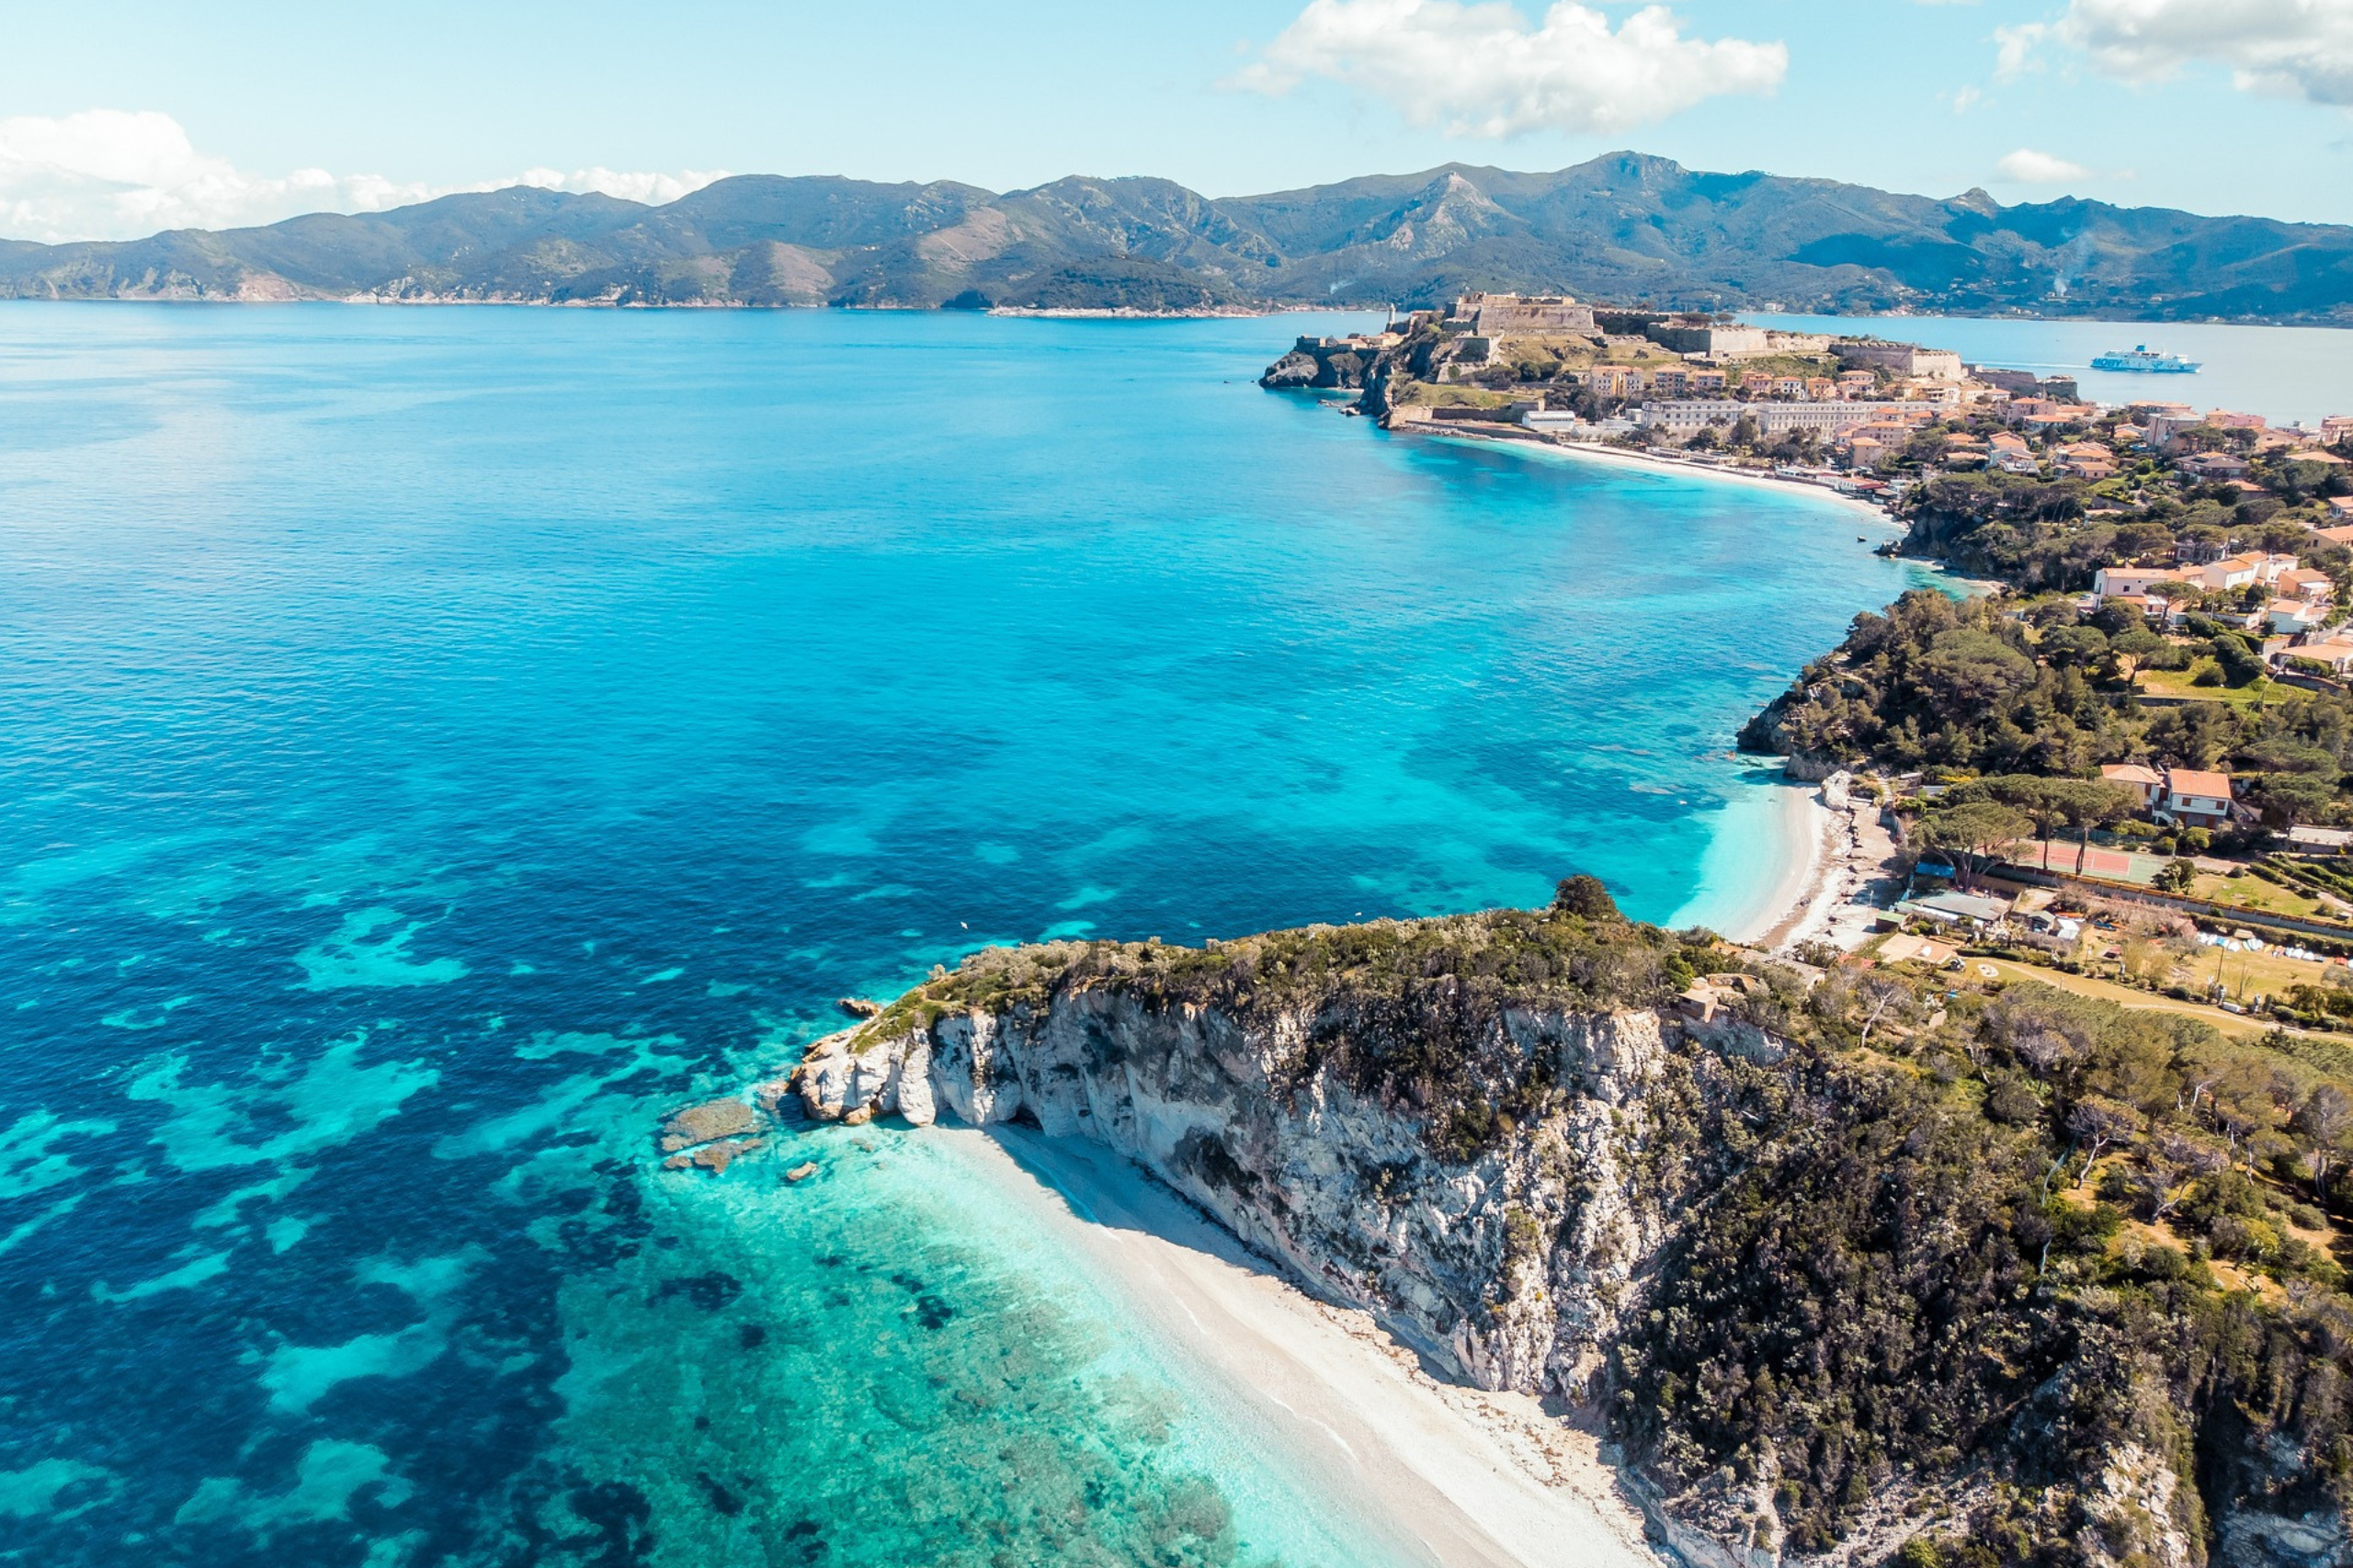 Türkisfarbenes Meer wie aus dem Bilderbuch - die mediterrane Insel Elba.